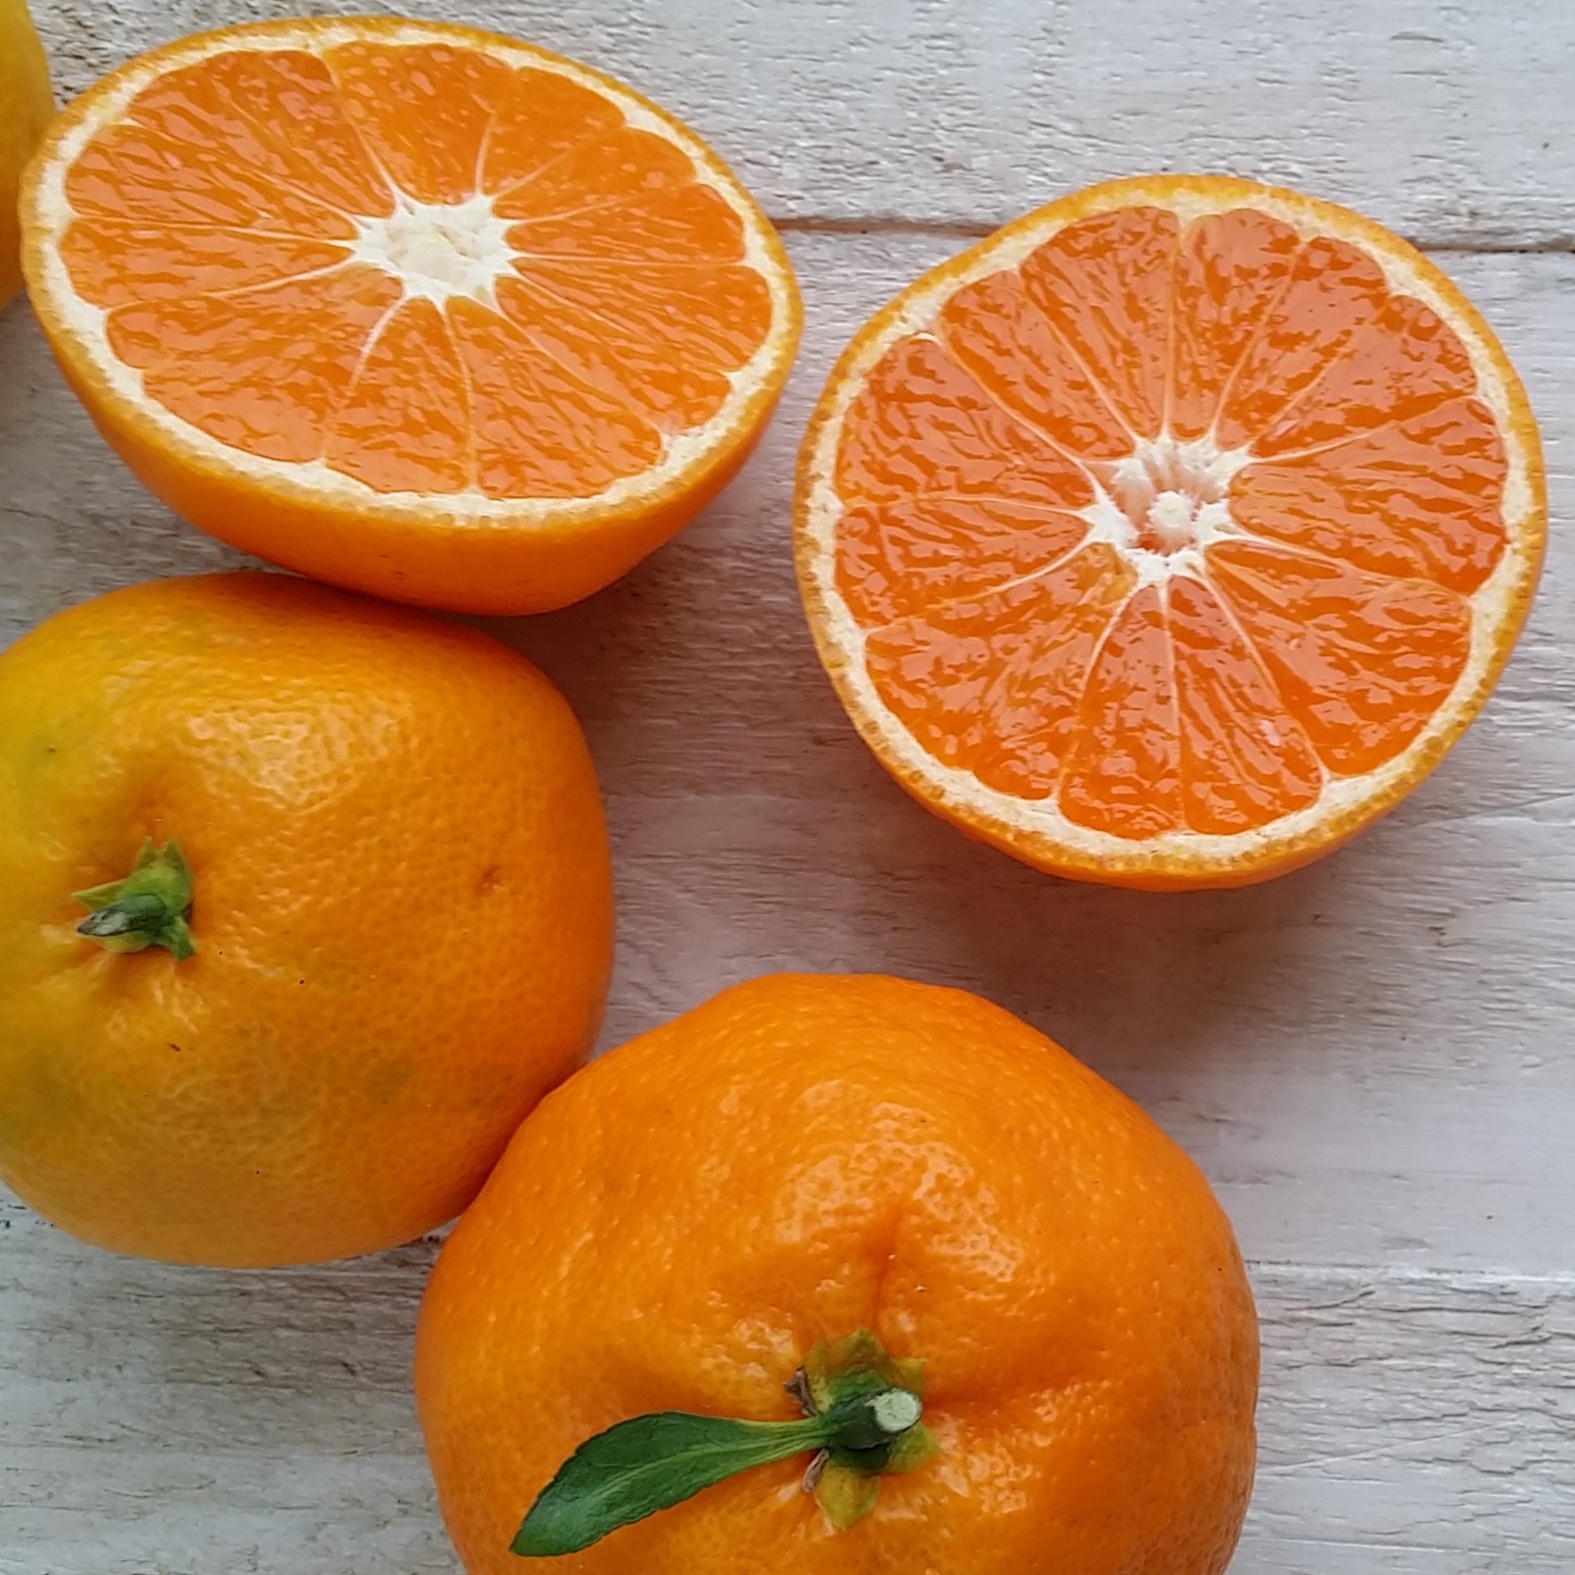 Ecorces de mandarine confites